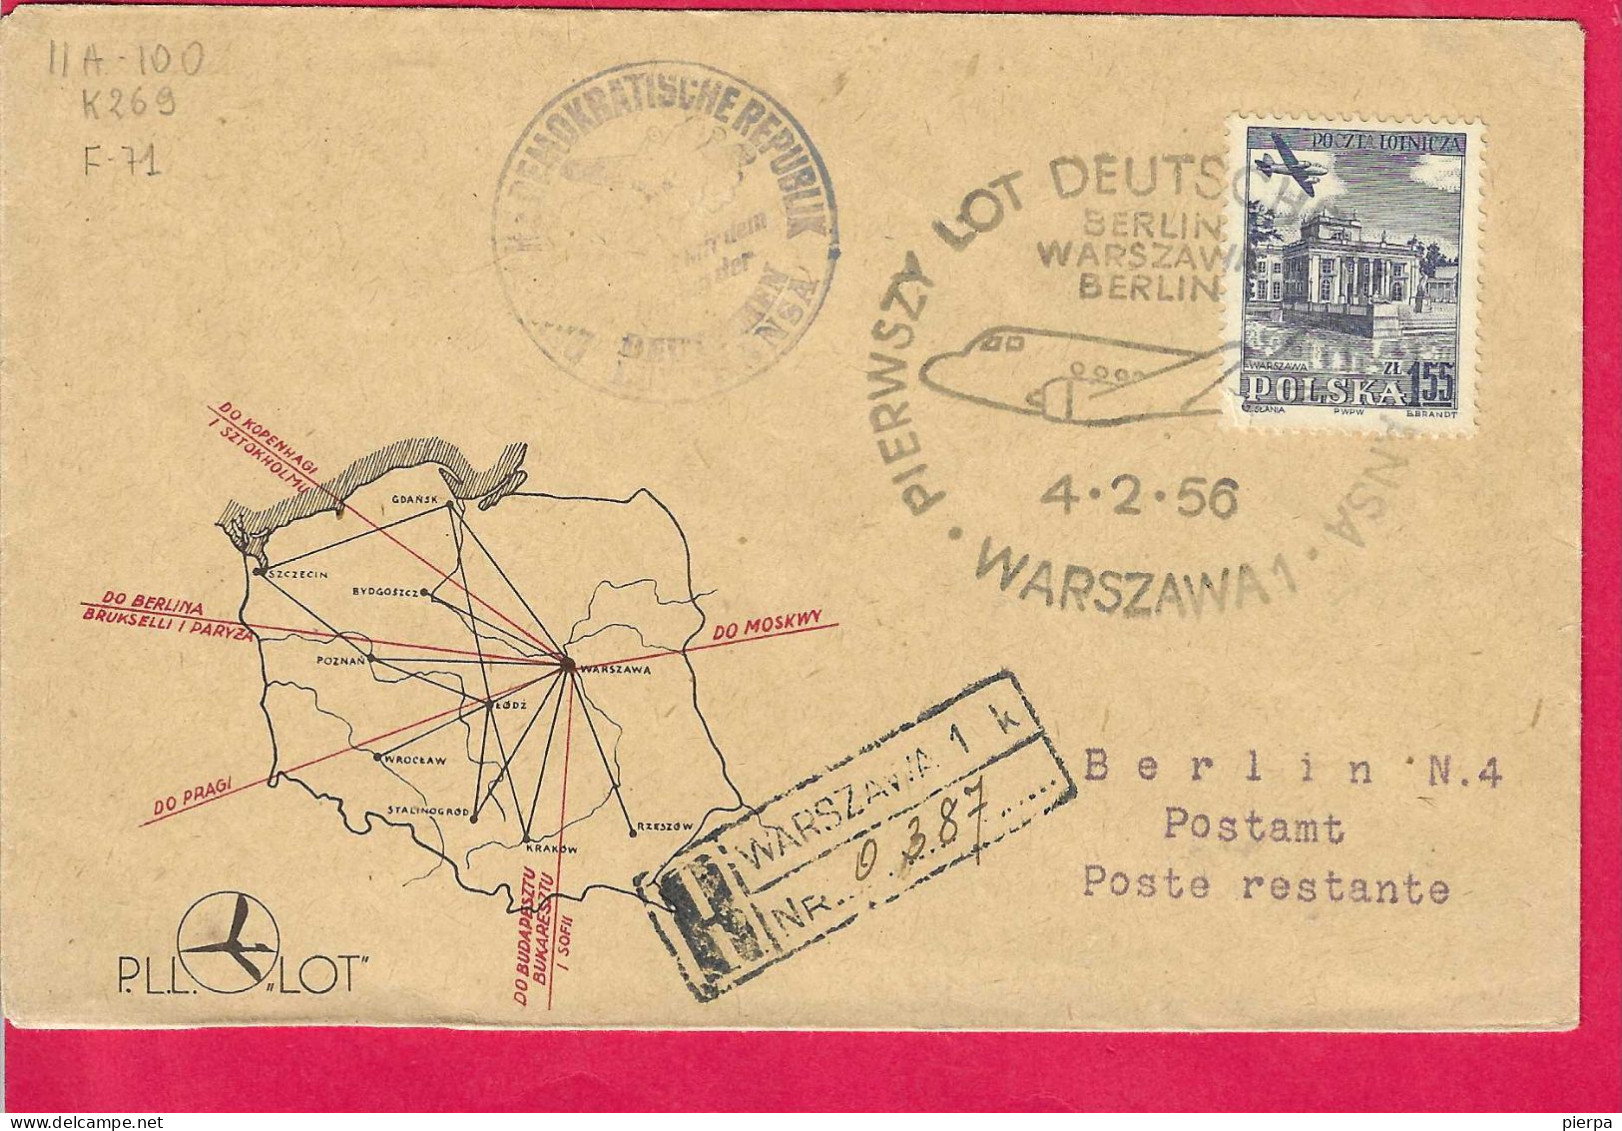 POLAND - LOT FLIGHT BERLIN/WARSZAWA/BERLIN *4.2.56* ON OFFICIAL COVER - Posta Aerea